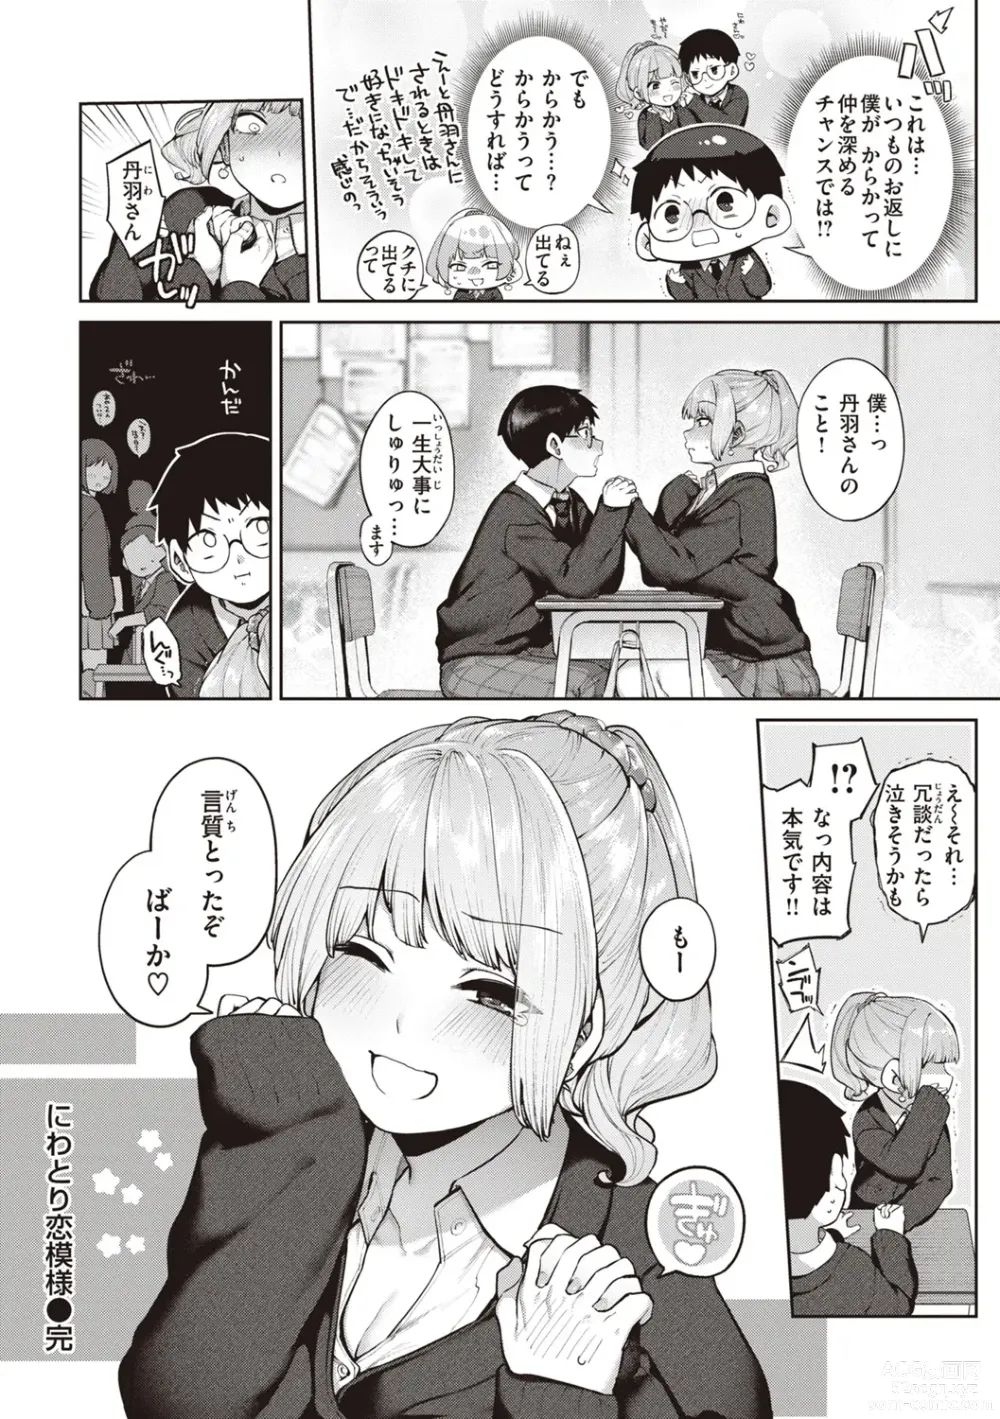 Page 28 of manga DA-DA-MO-RE